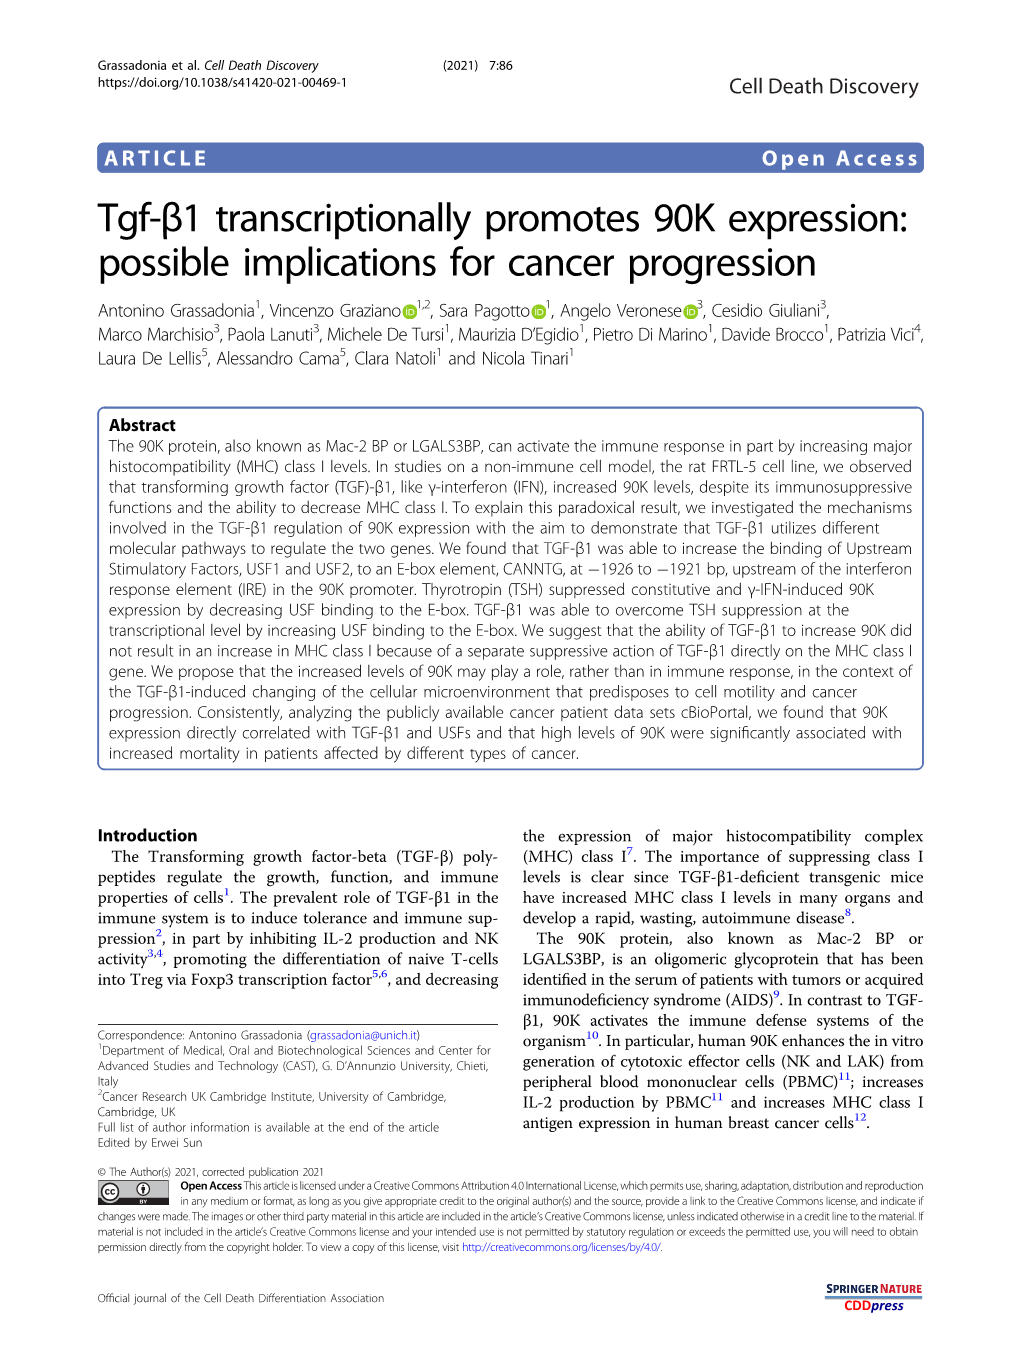 Tgf-Β1 Transcriptionally Promotes 90K Expression